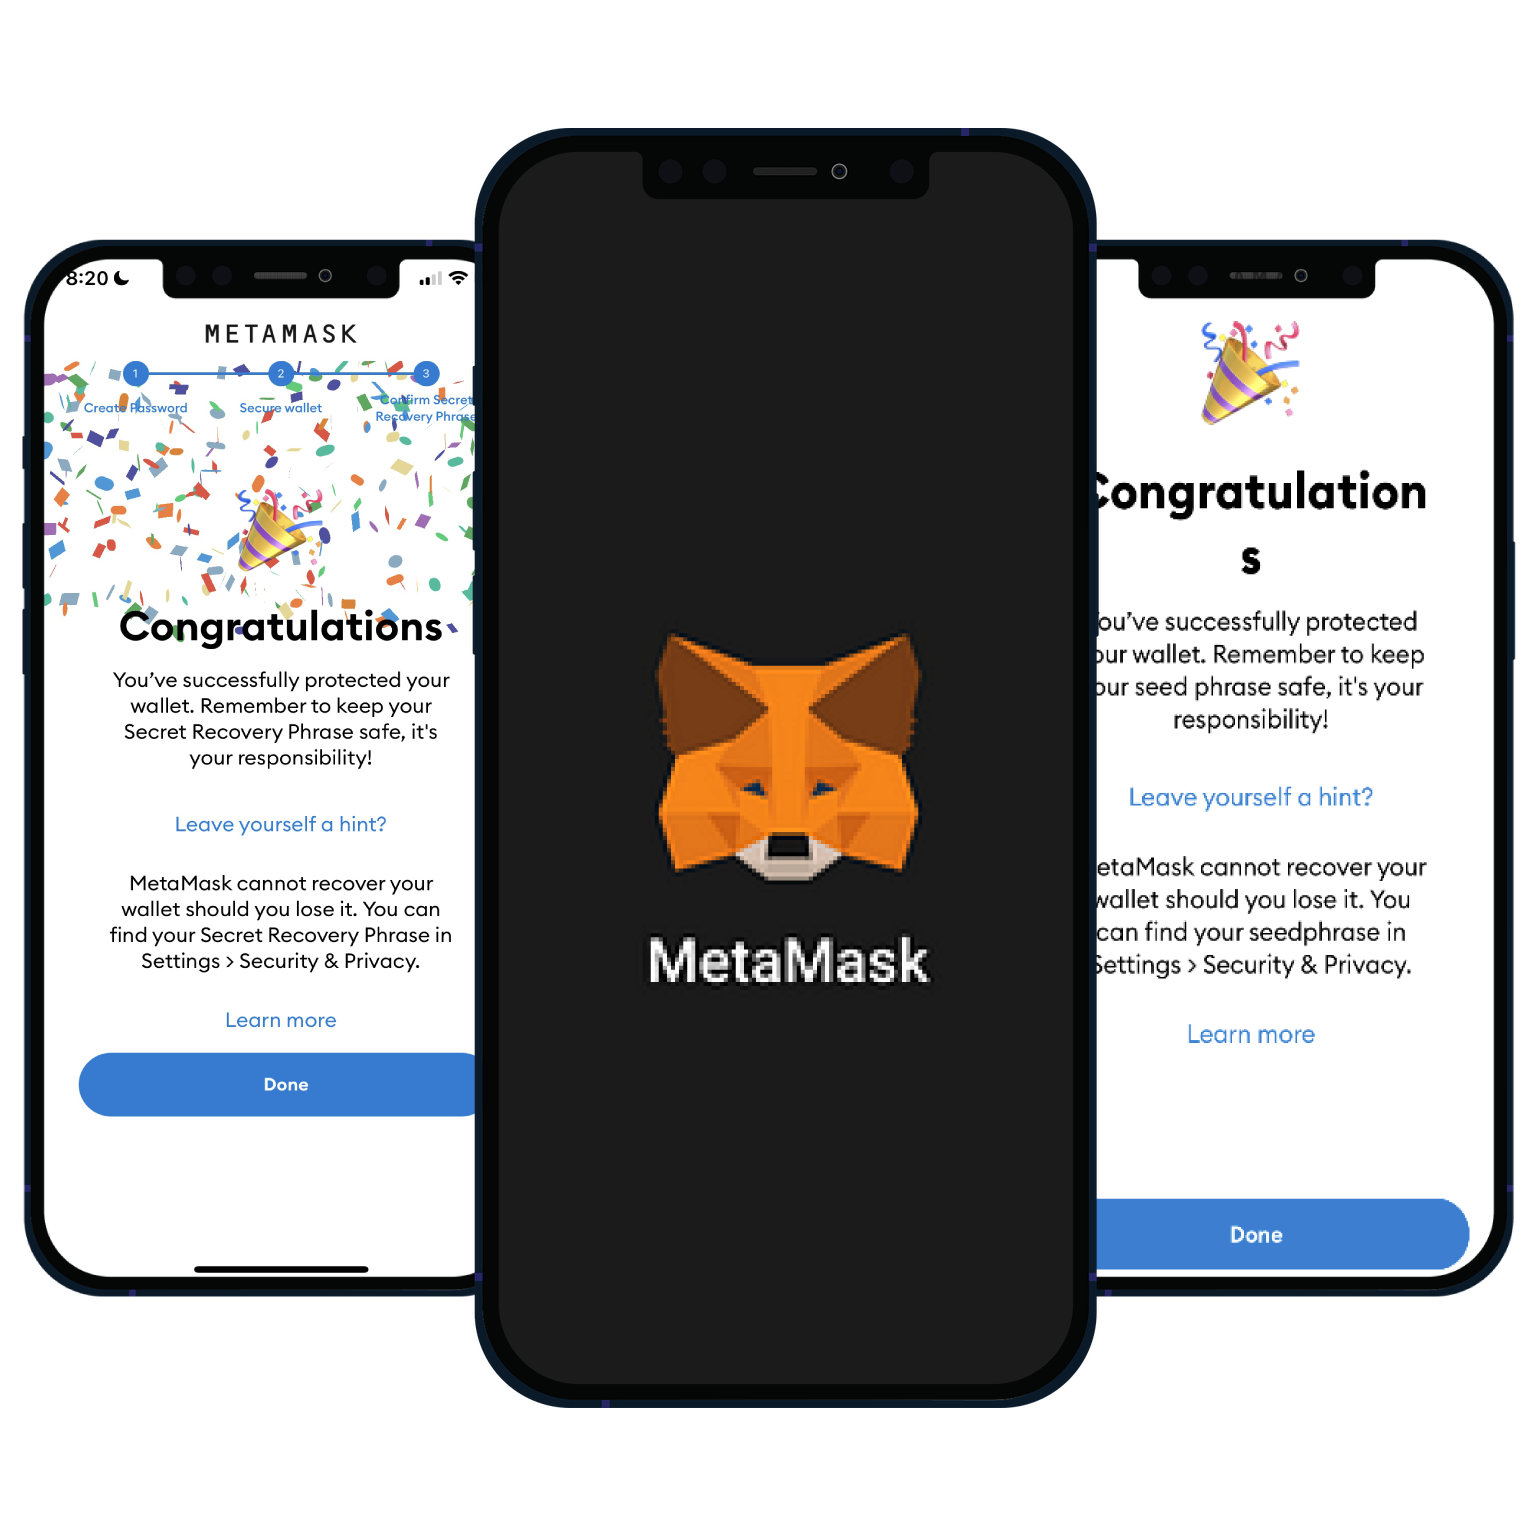 MetaMask Success Story